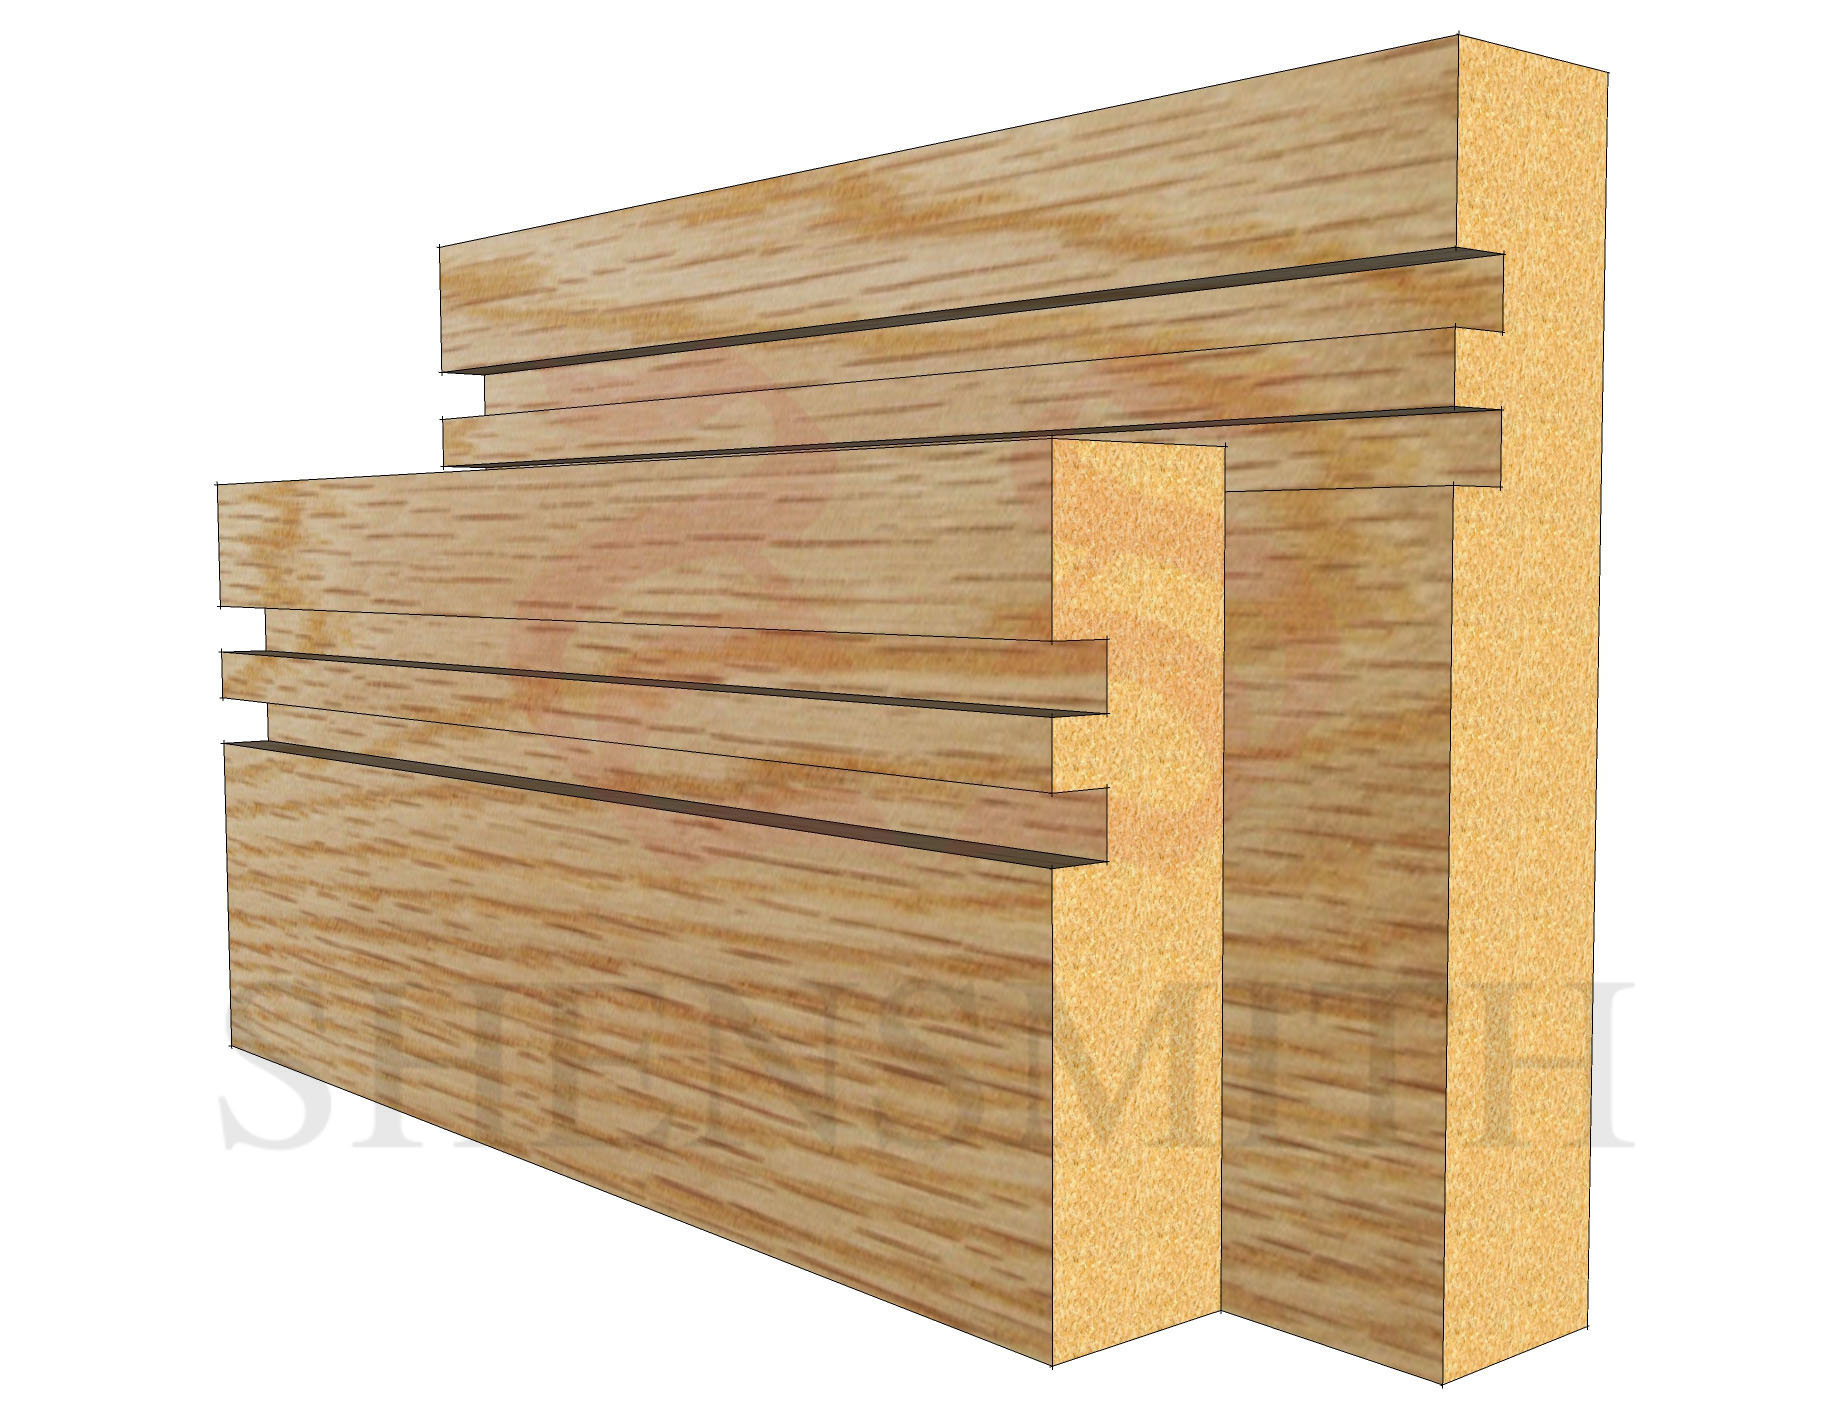 rebated-2mm-oak-skirting-board-skirtingboards